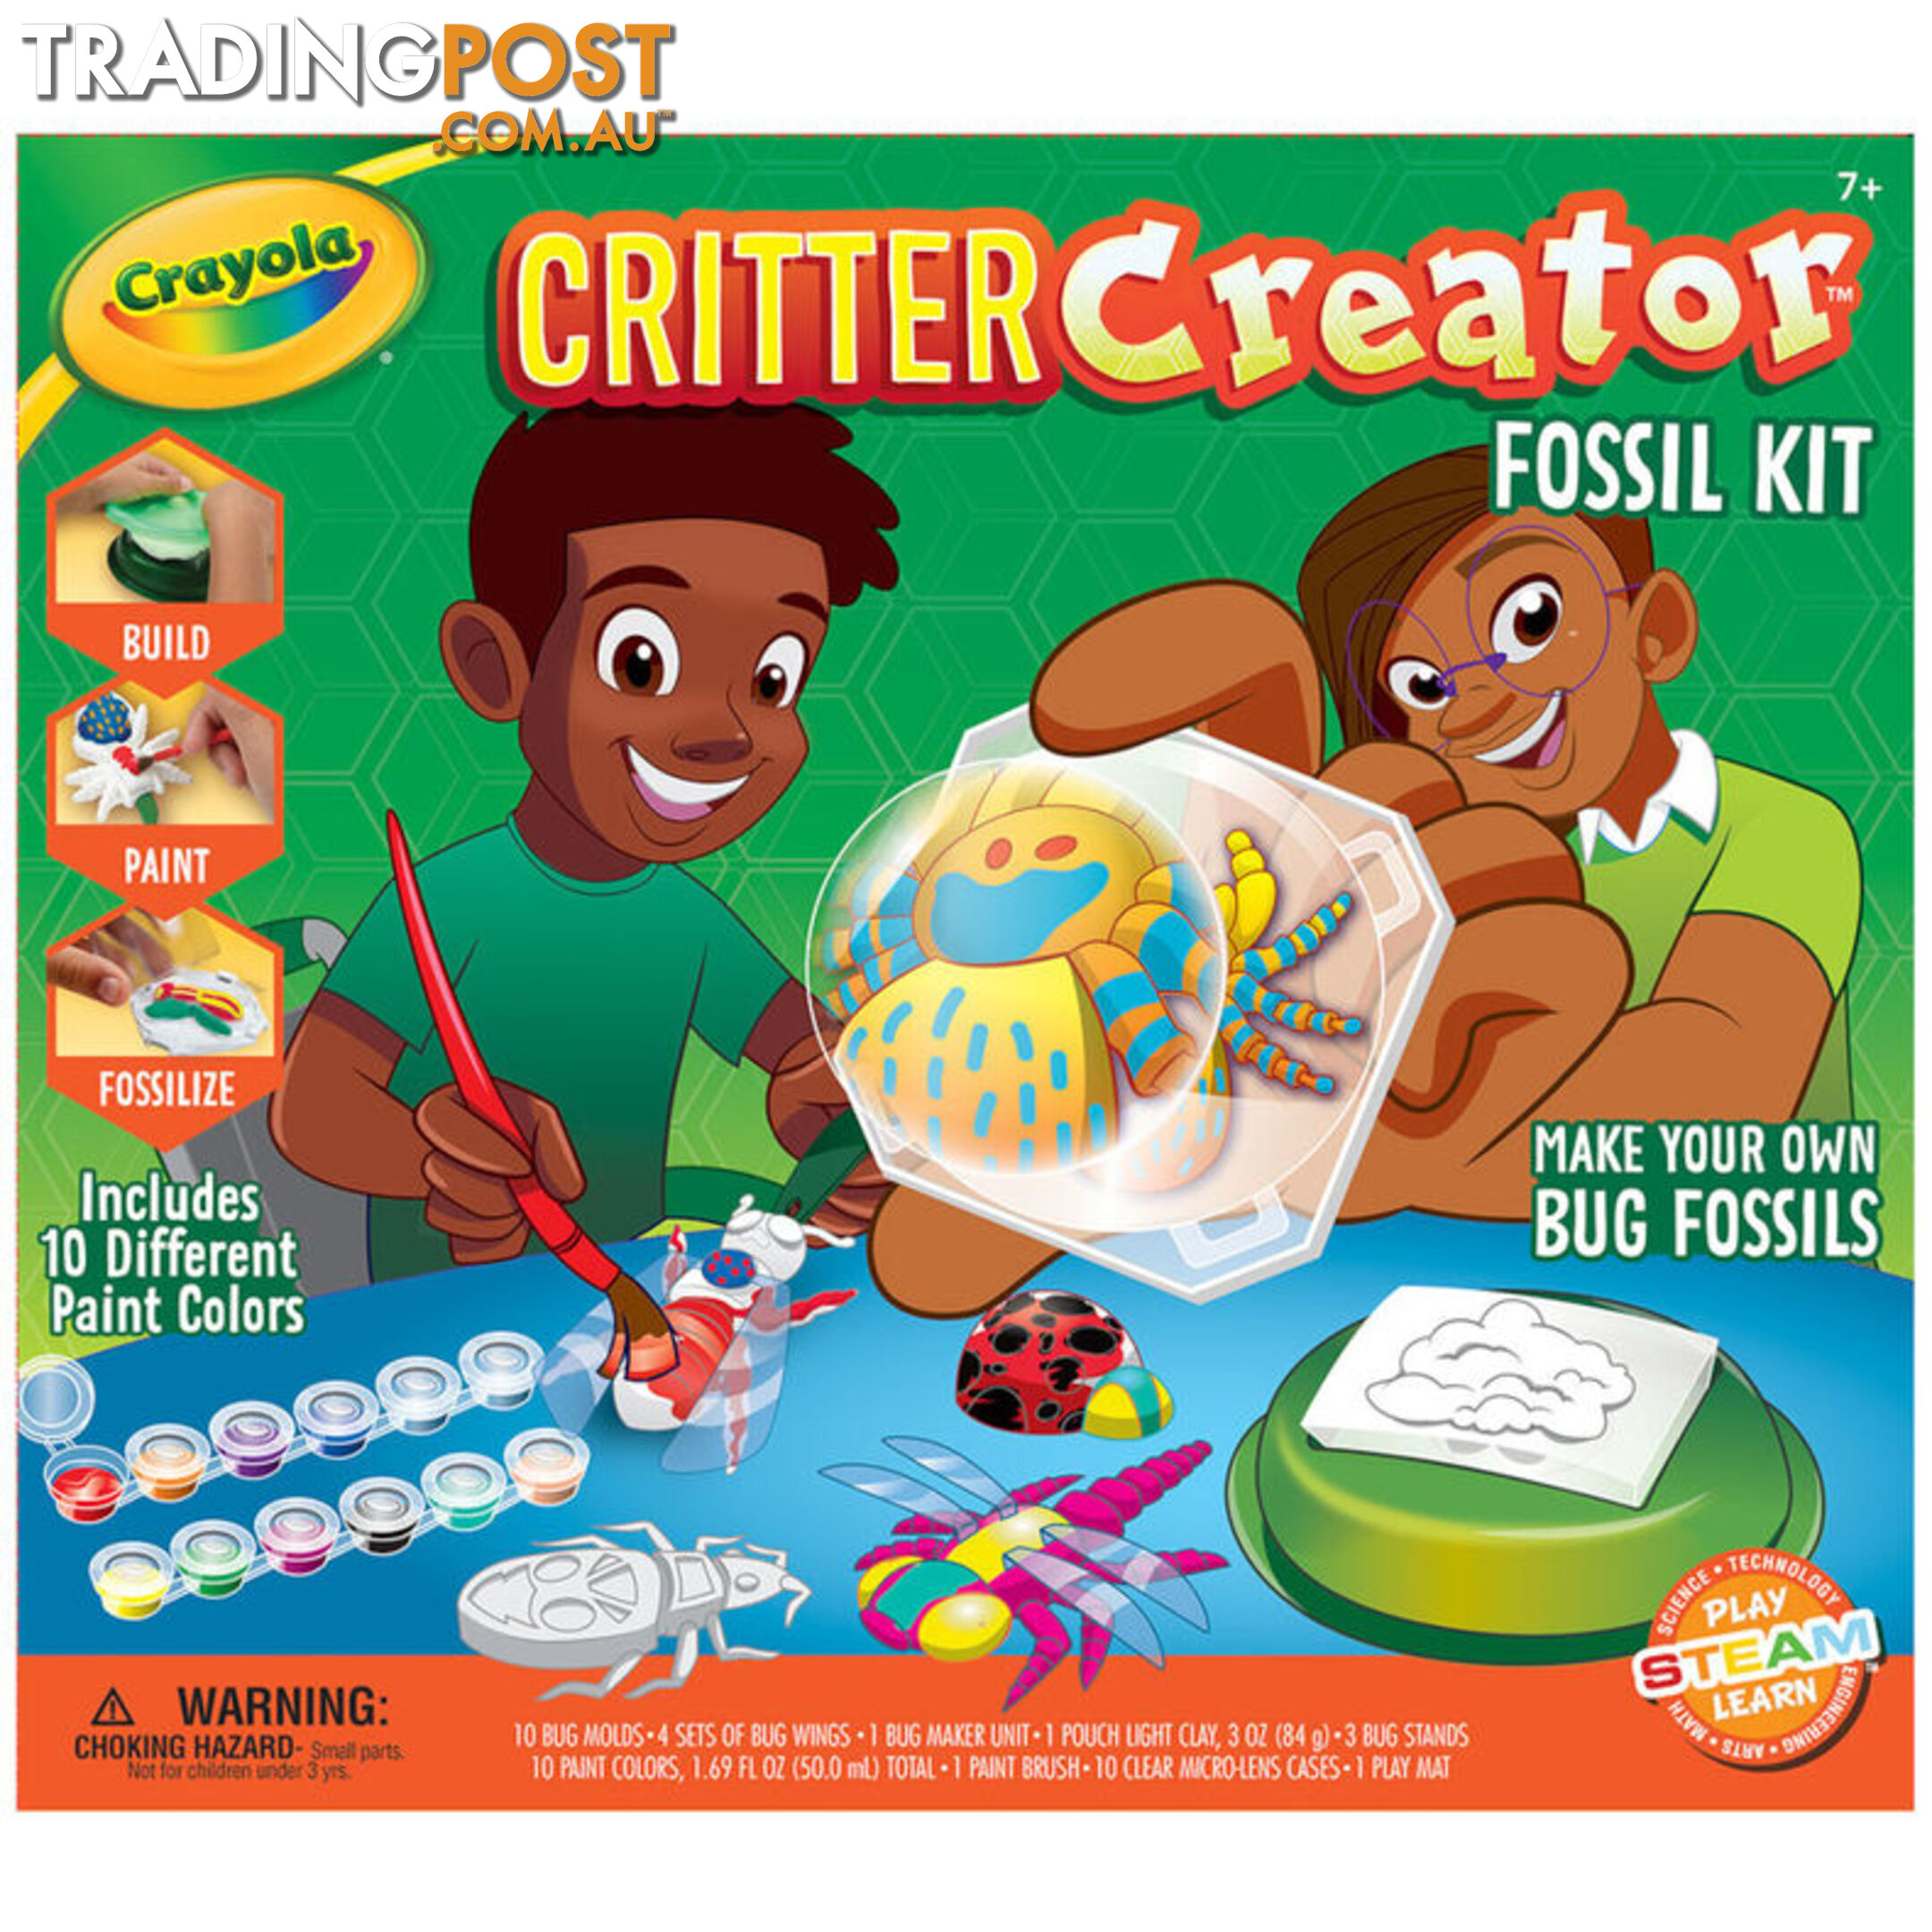 Critter Creator Metallic Bug Fossil Kit for Kids - Bs747495 - 71662074951